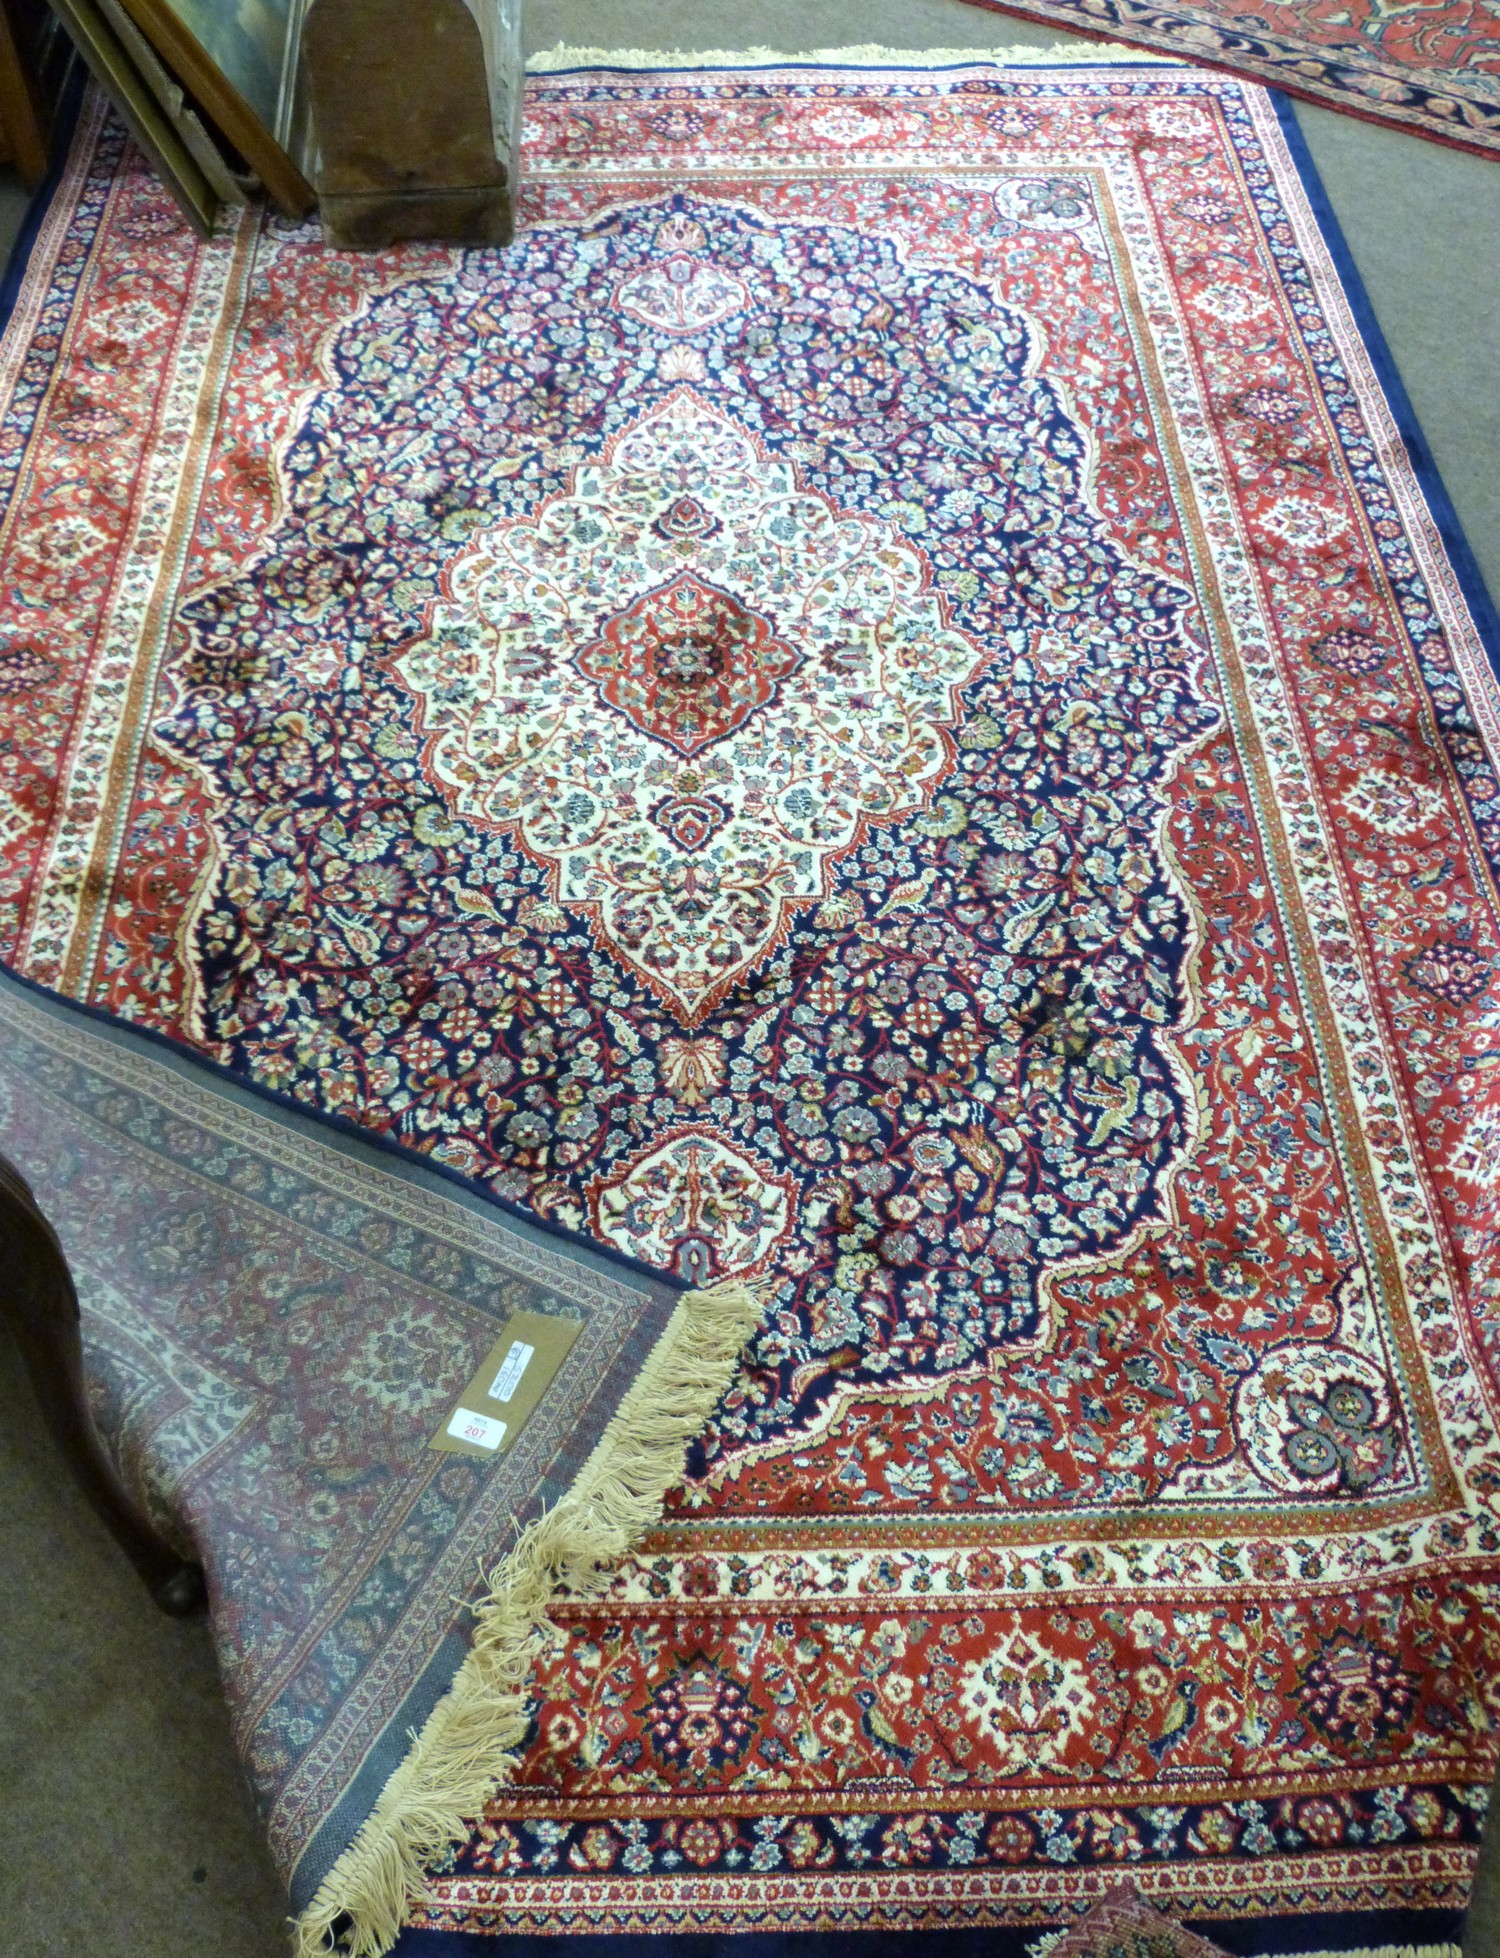 Kashmiri rich blue ground full pile floral pattern rug, 240 x 160cm